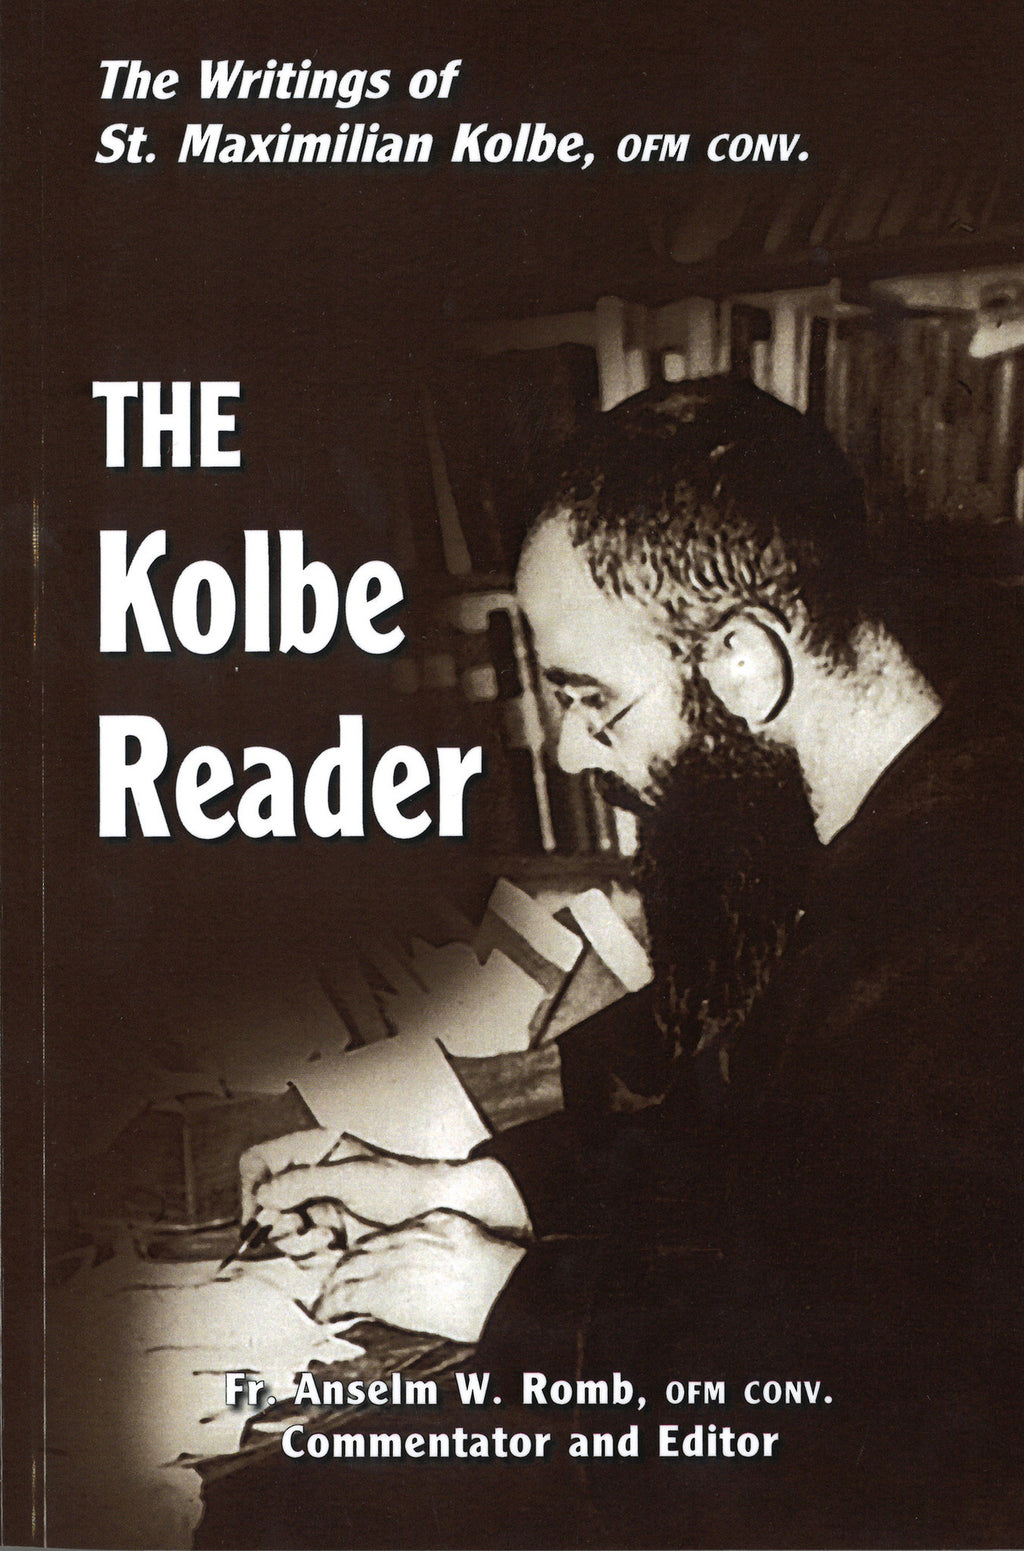 THE KOLBE READER